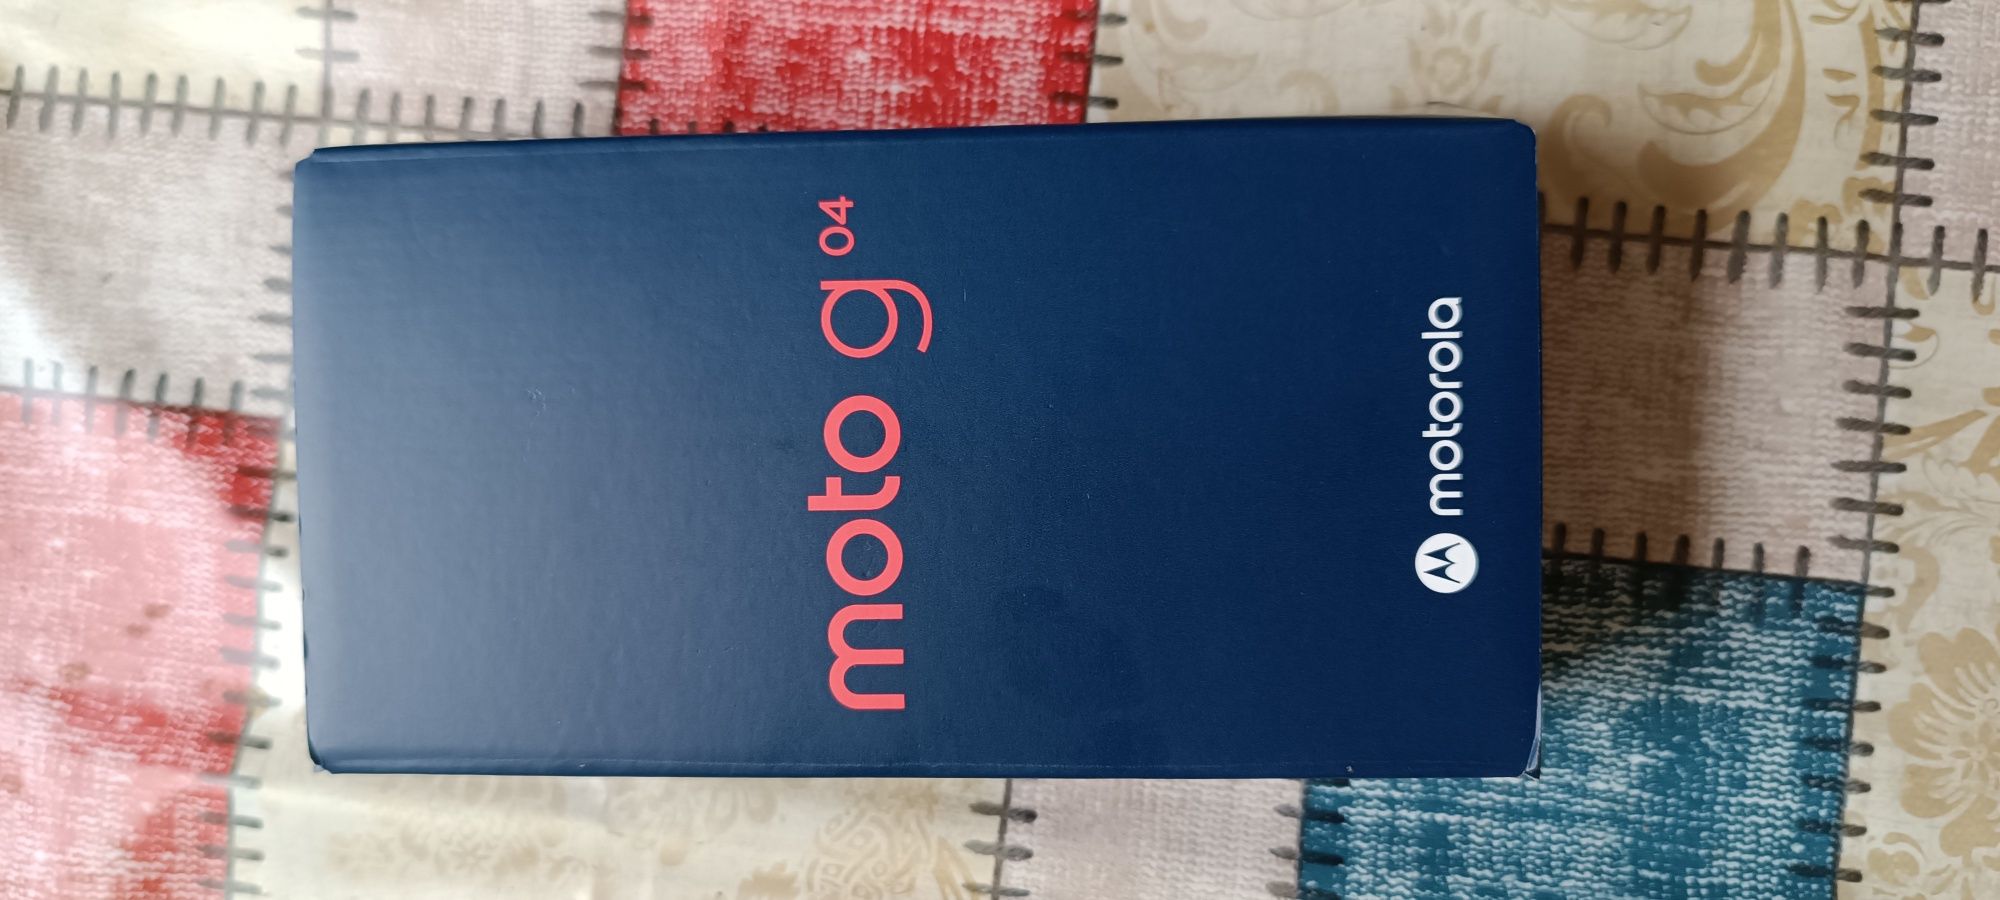 Motorola g04 nowa nieuzywana